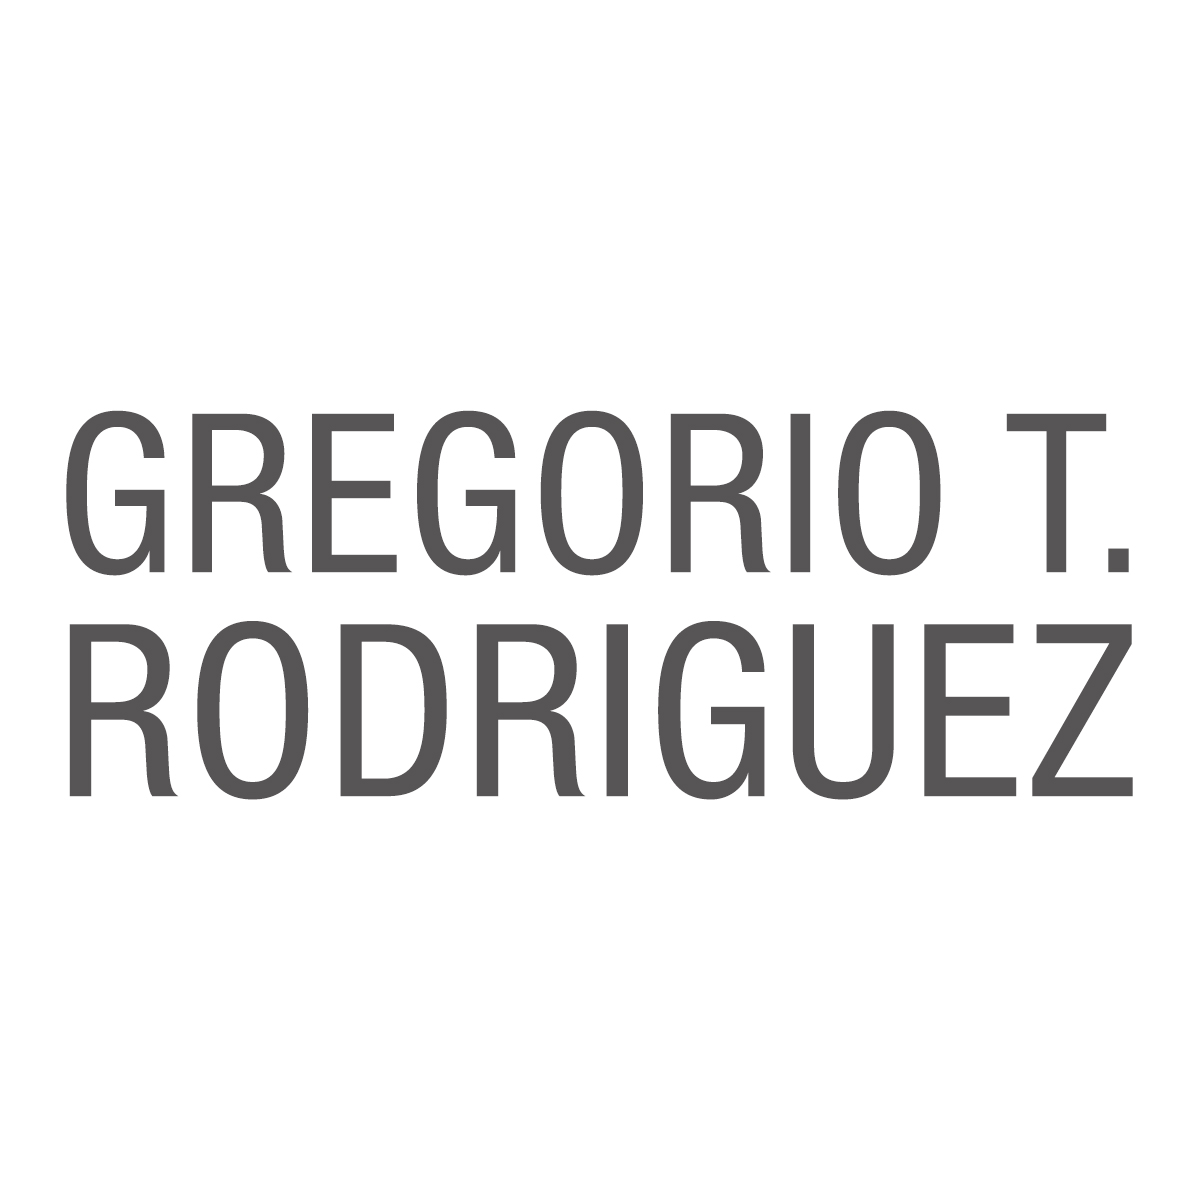 Gregorio T. Rodriguez